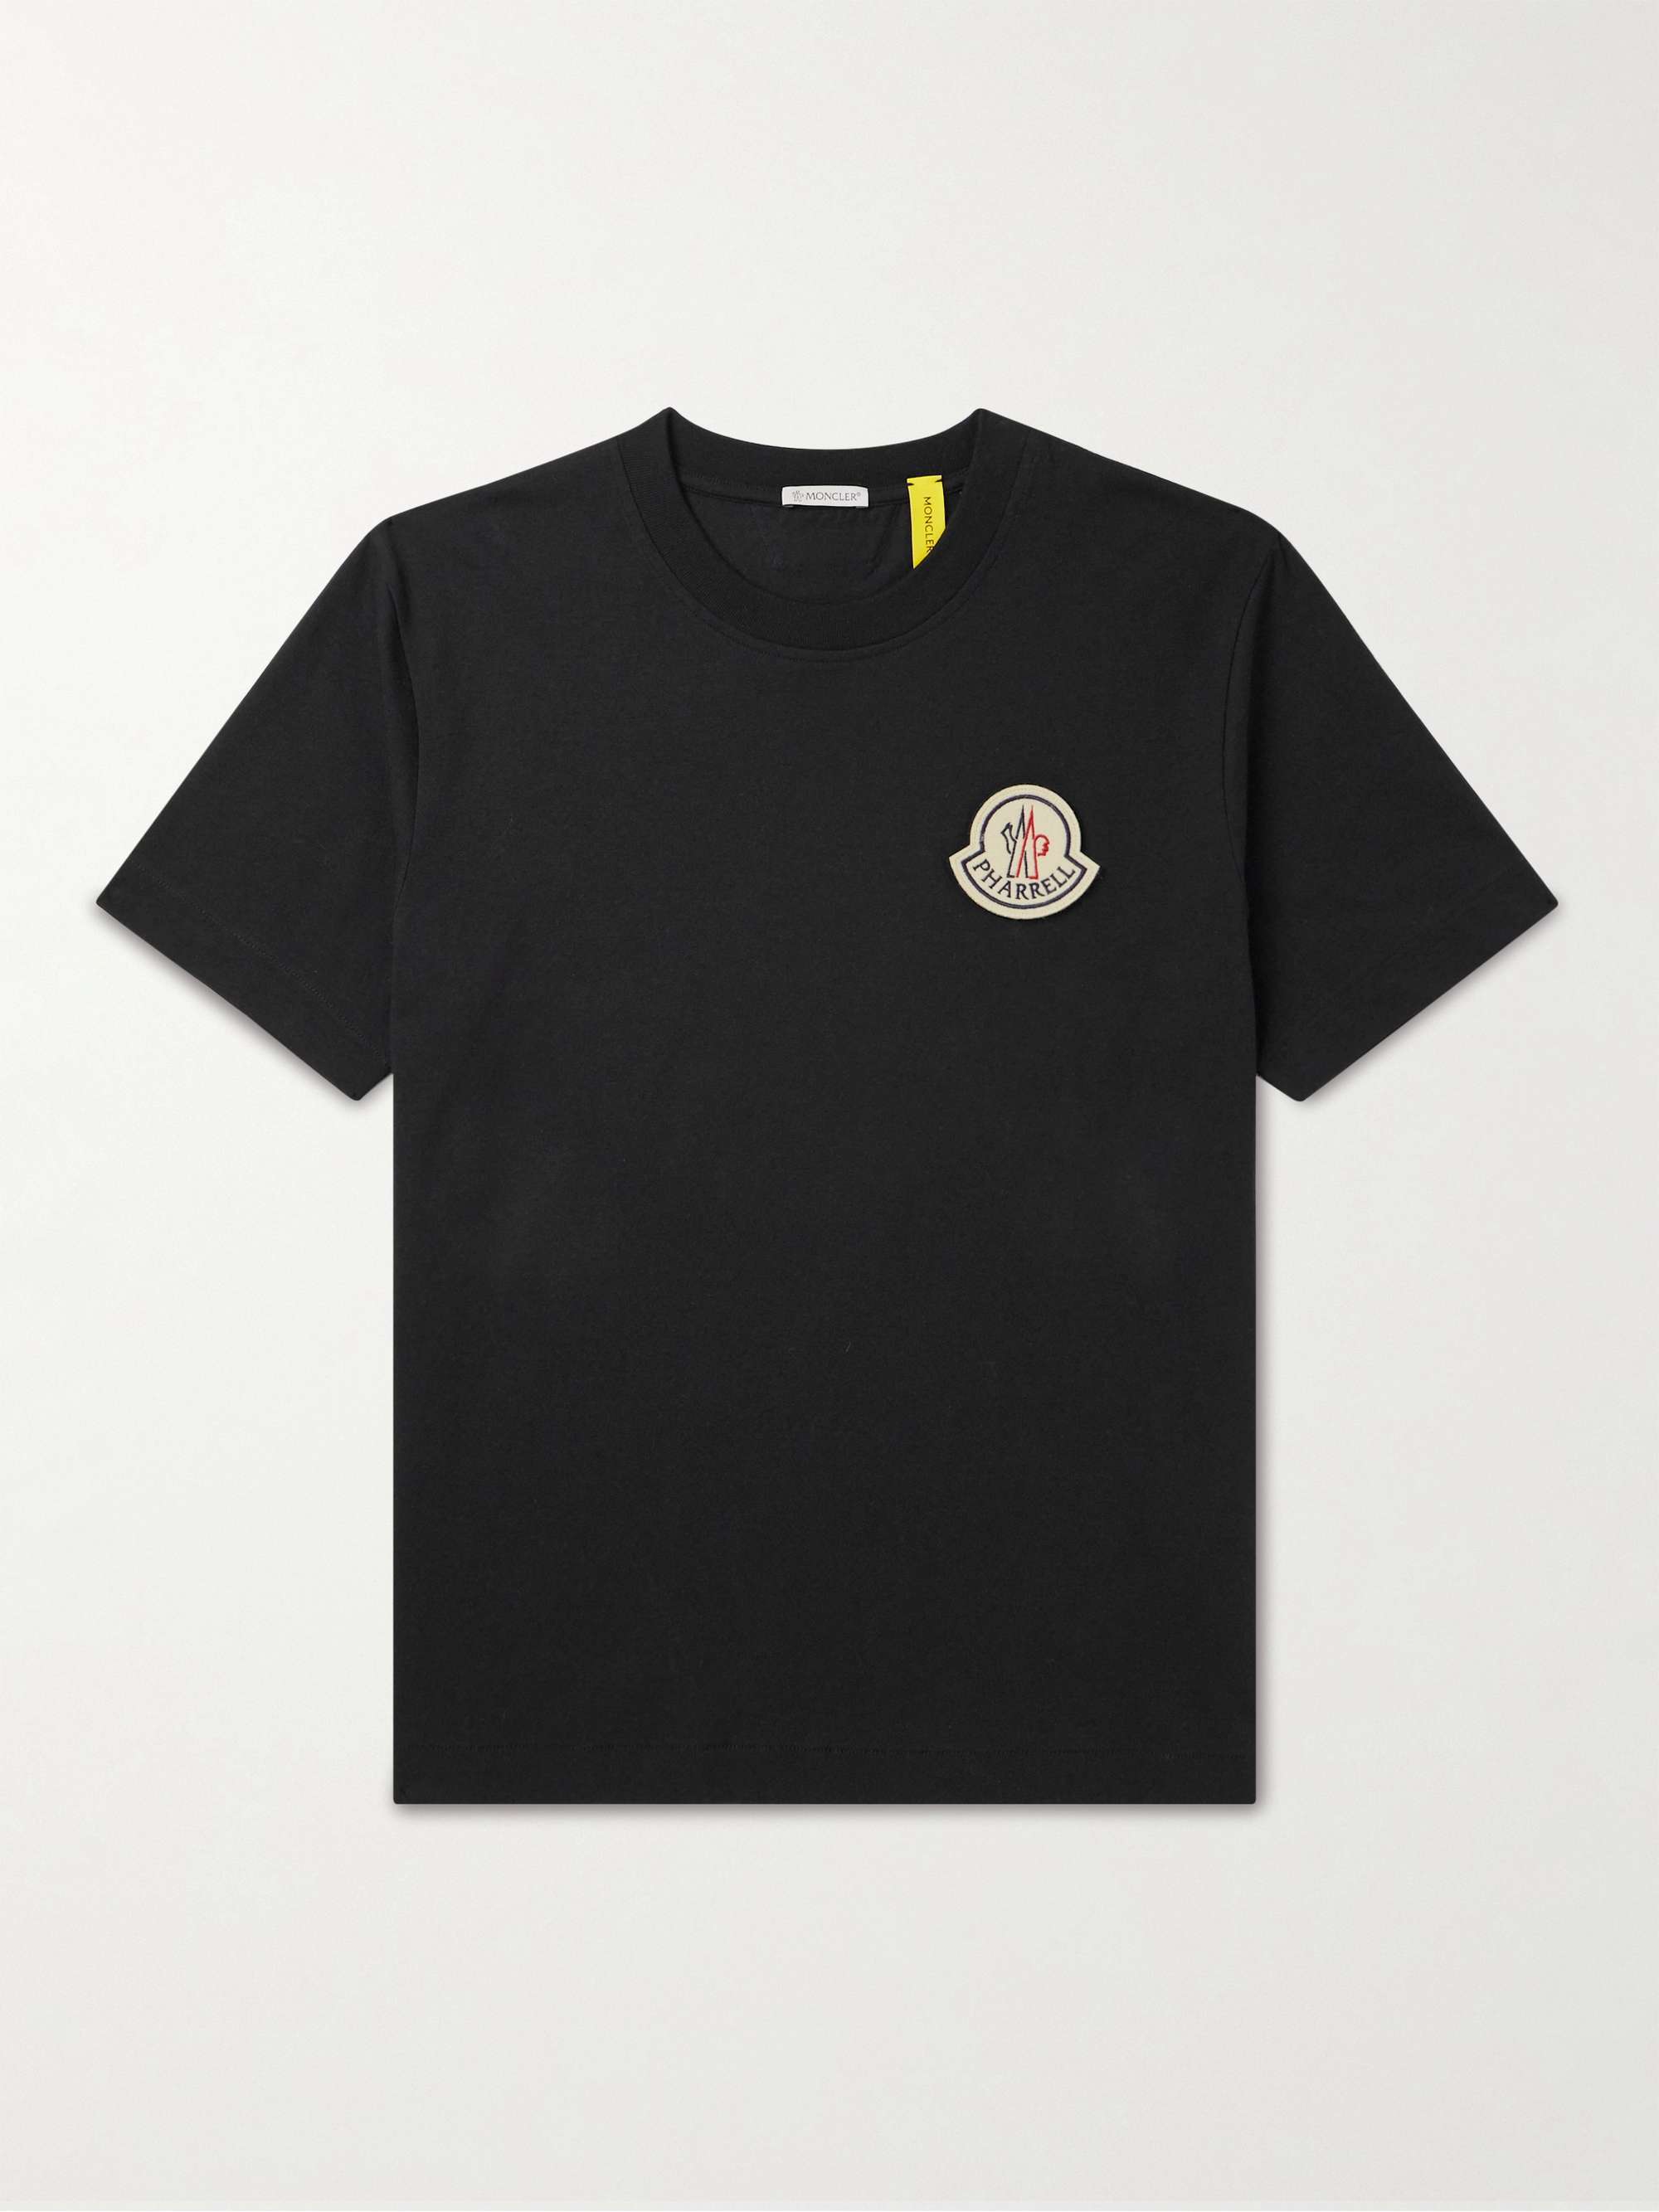 MONCLER GENIUS + Pharrell Williams Logo-Appliquéd Cotton-Jersey T-Shirt ...